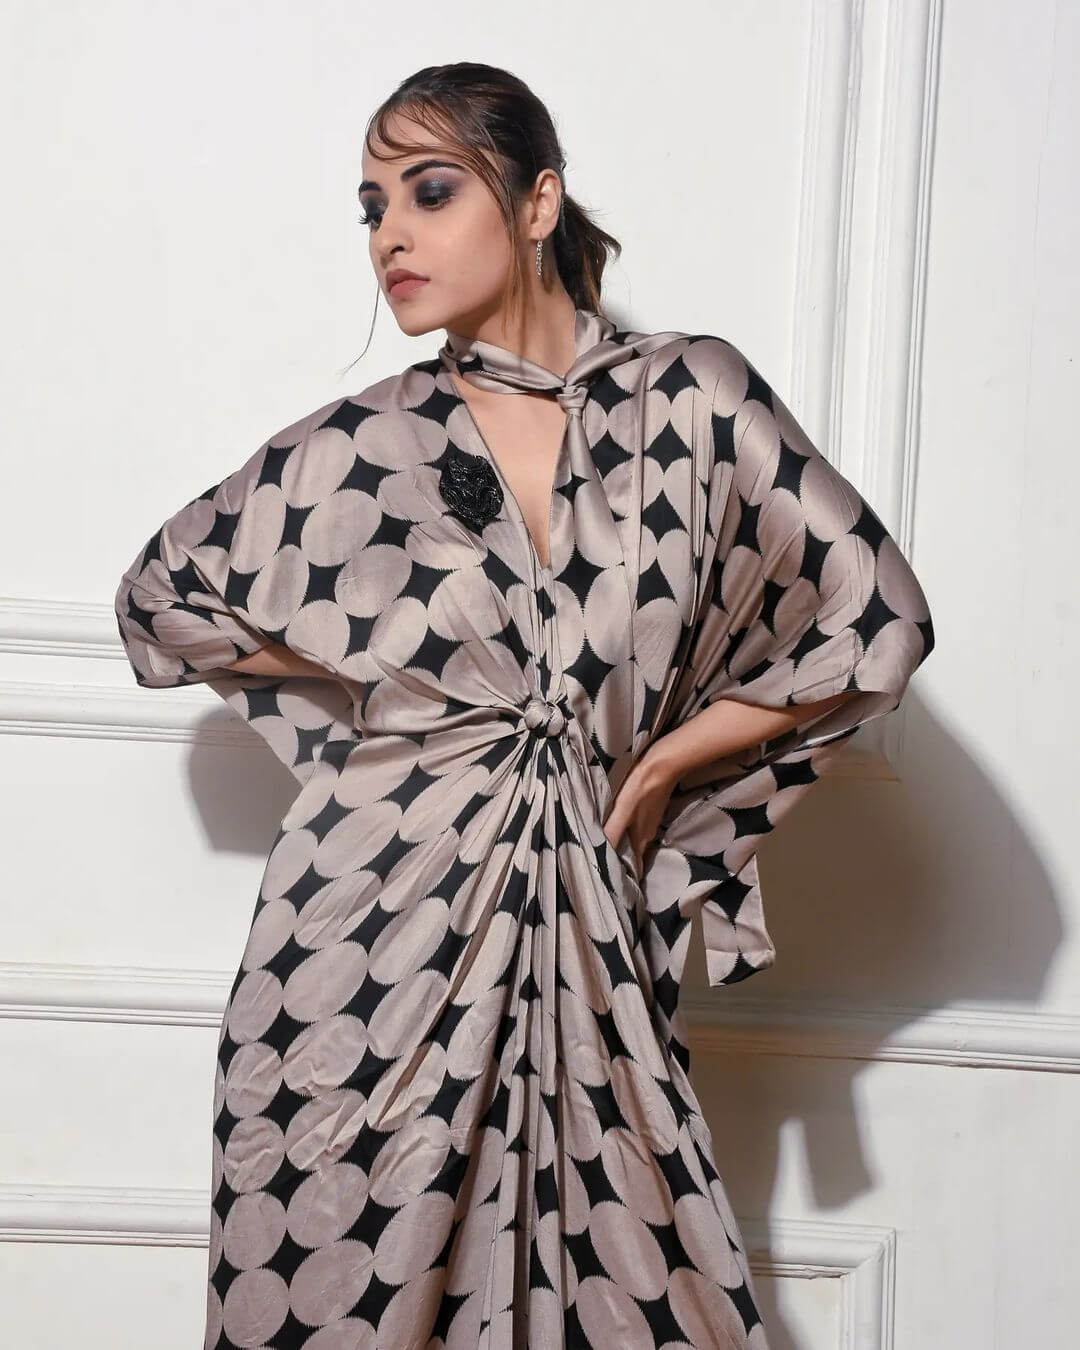 TV Actress Niyati Fatnani Chic Look In Grey & Black Printed Drress